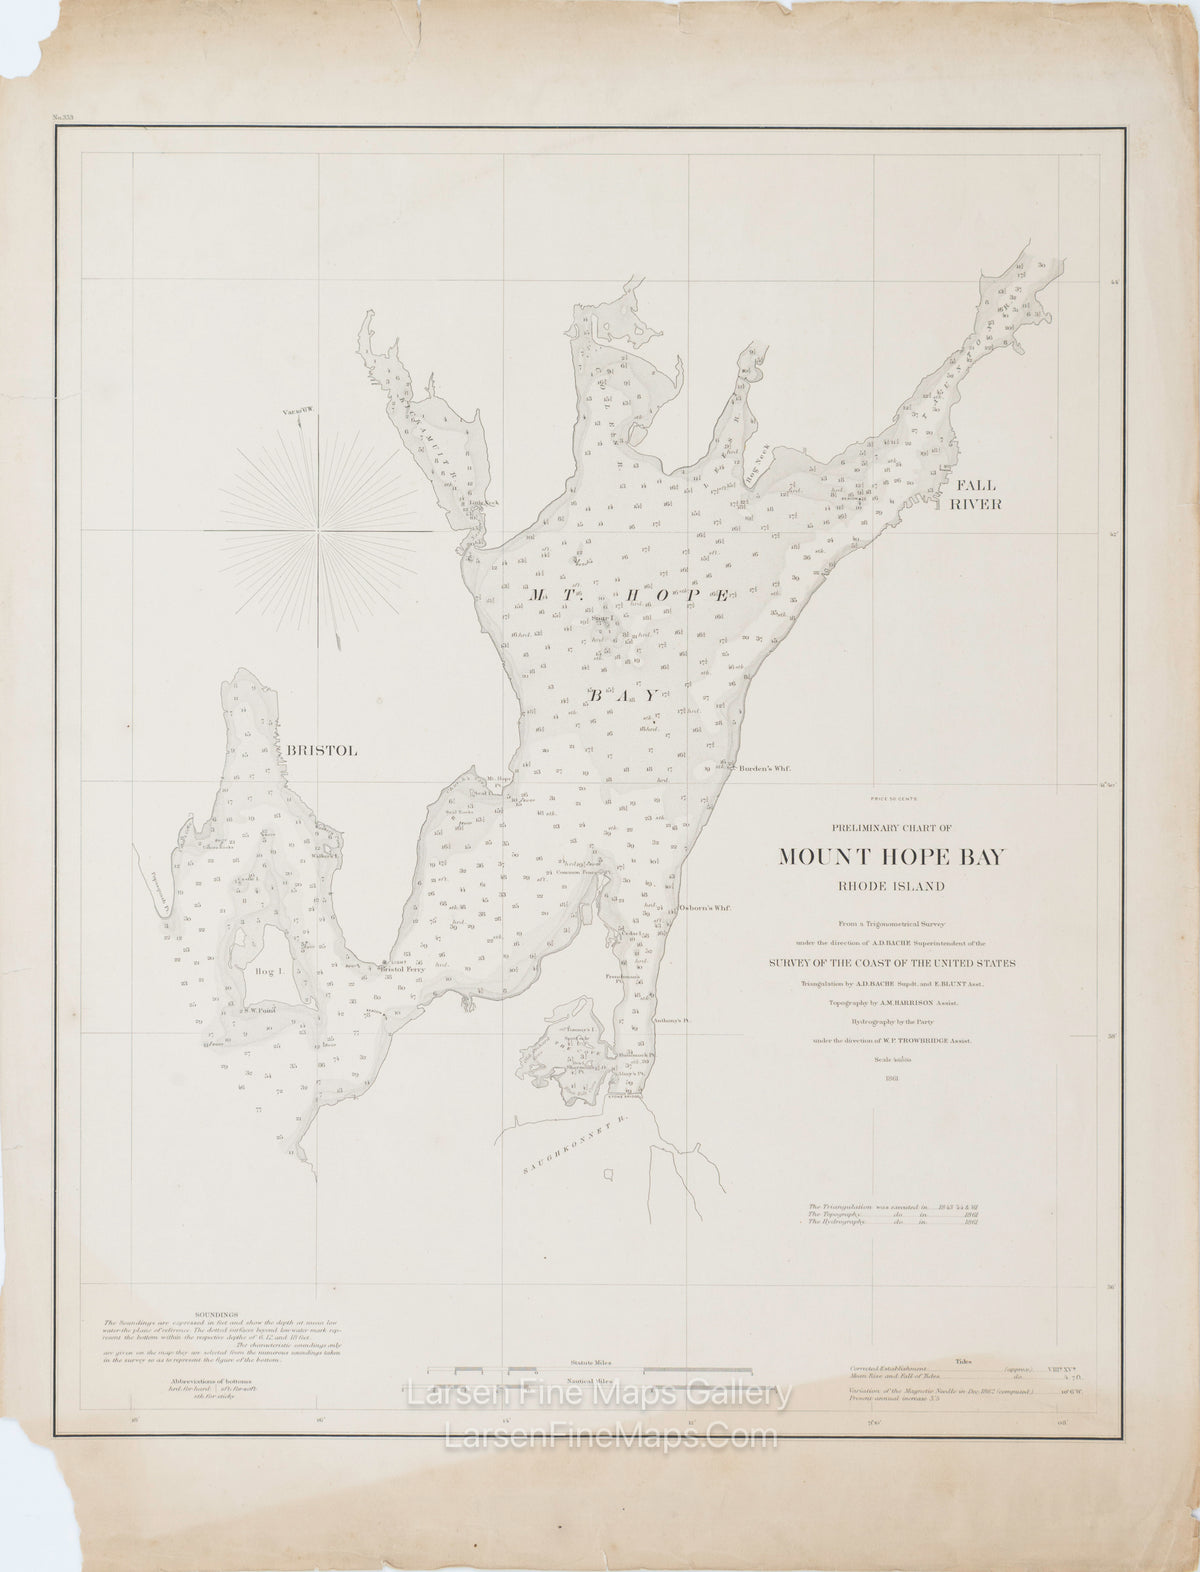 Preliminary Chart of Mount Hope Bay, Rhode Island